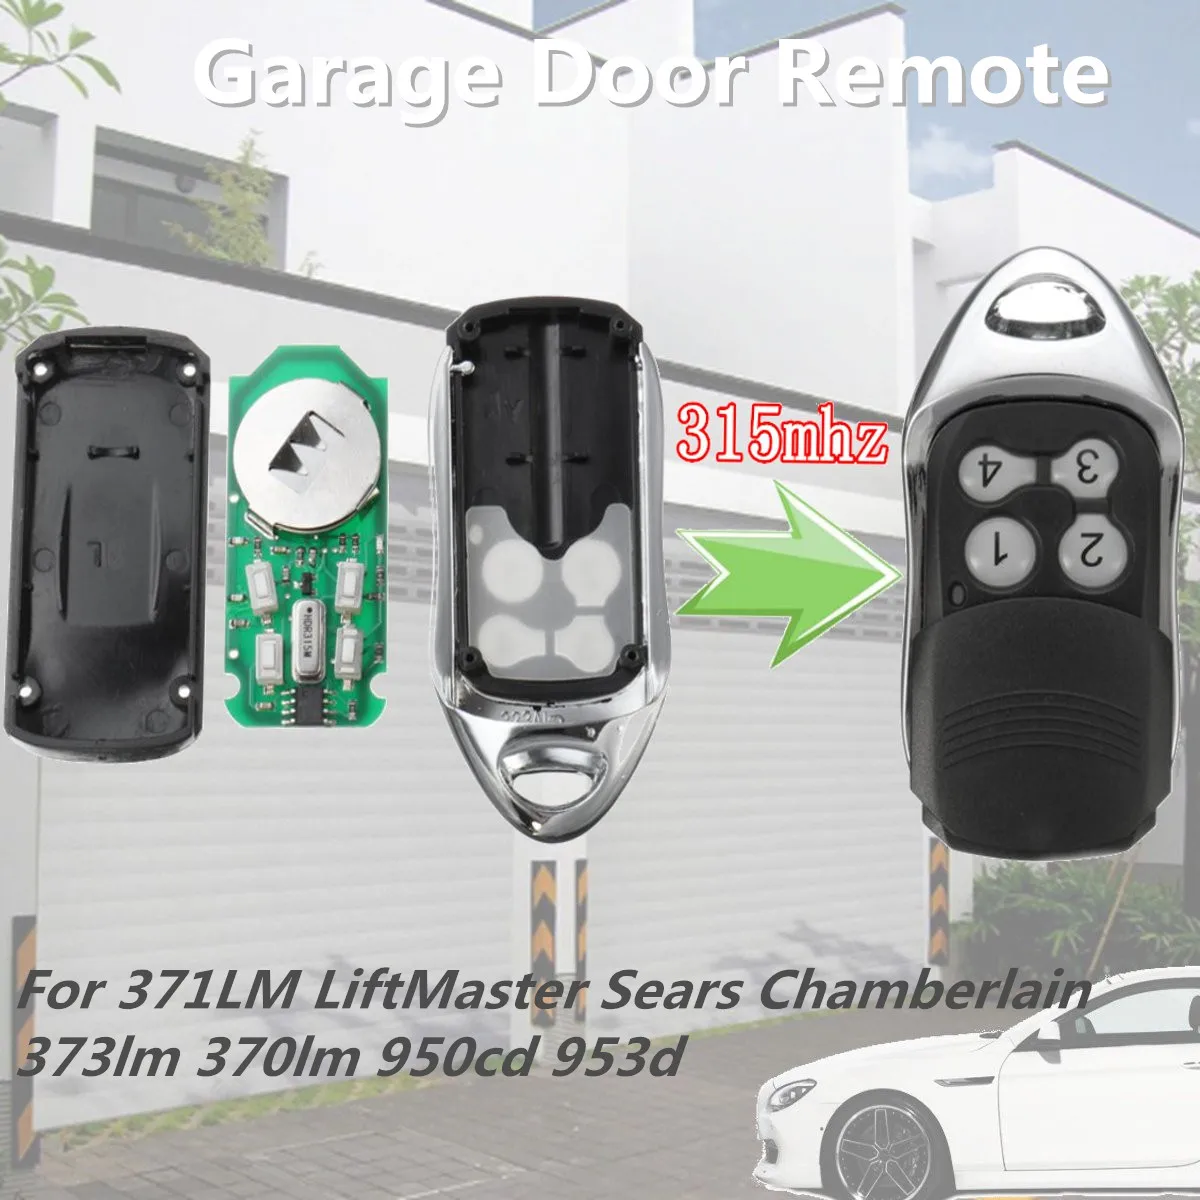 4 кнопки гаражный дистанционный ключ для 371LM LiftMaster Sears для Chamberlain 373lm 370lm 950cd 953d 315mHZ